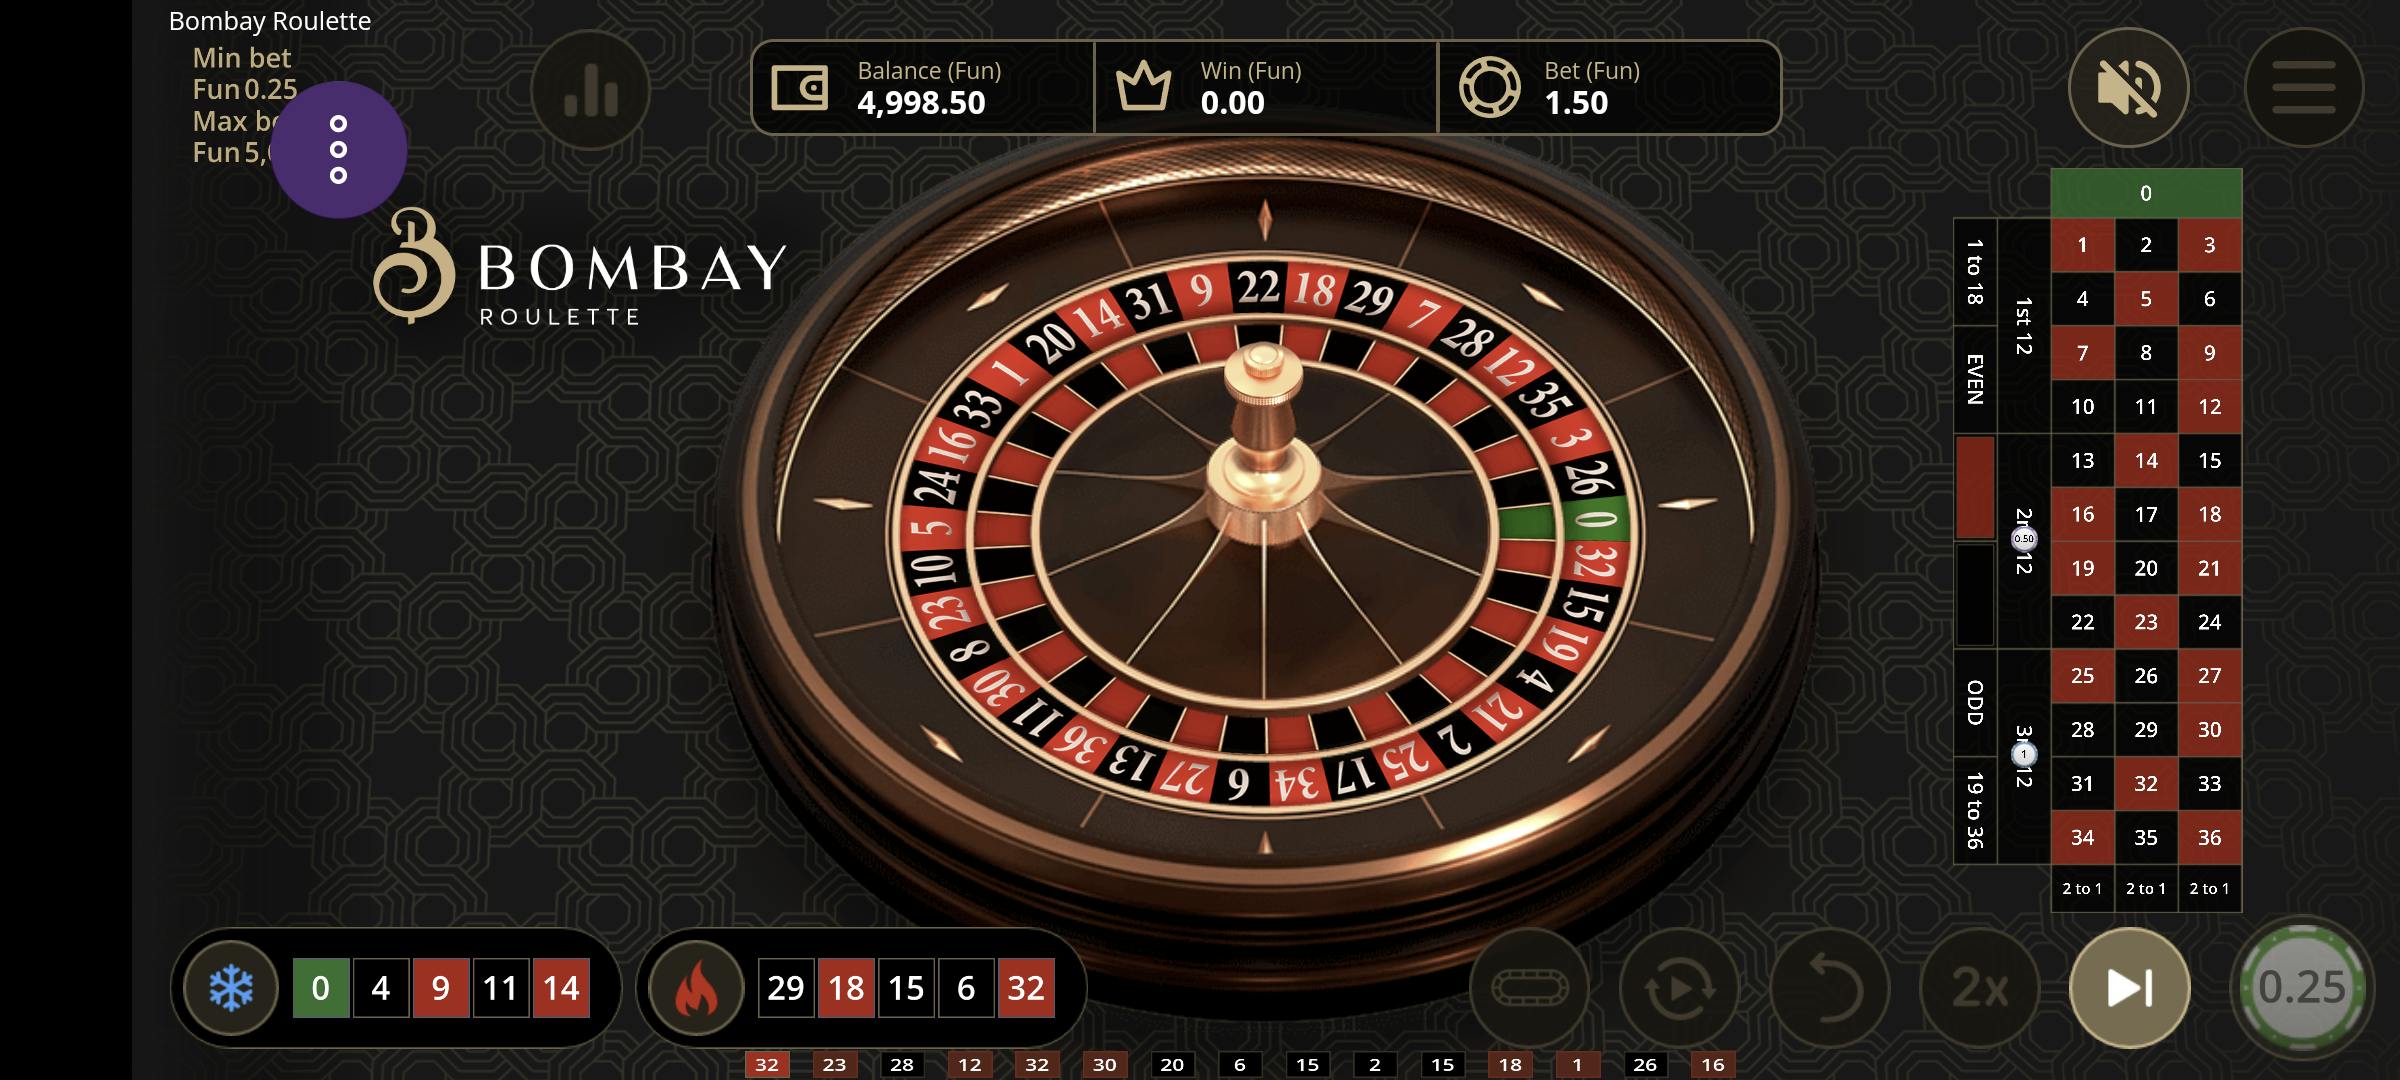 Bitcasino Bombay Roulette ゲームプレイ画面